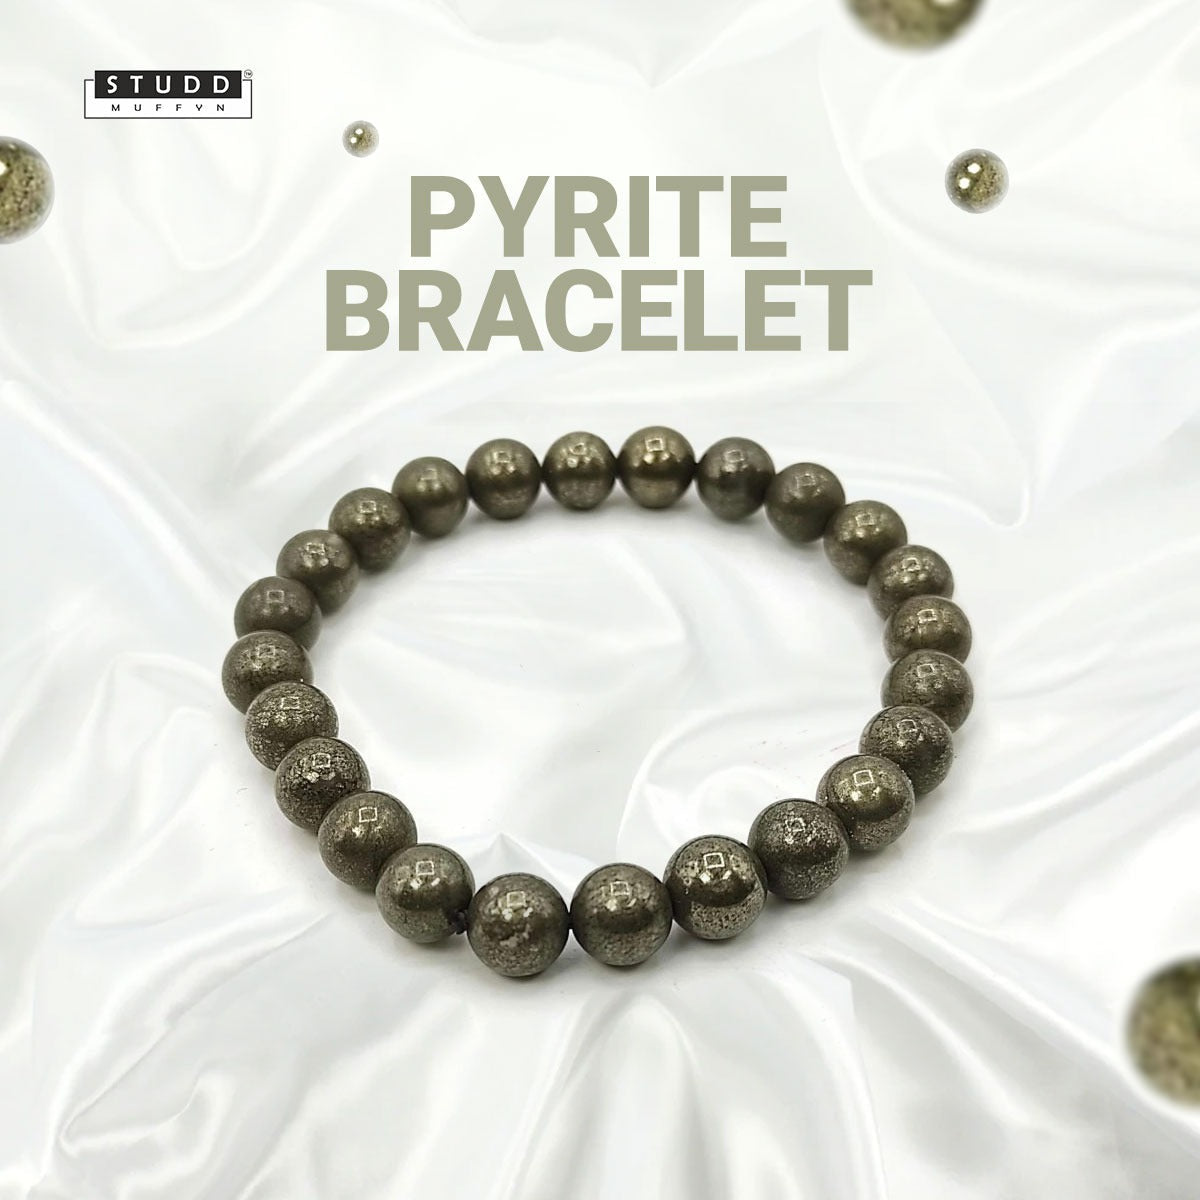 Natural Black Obsidian Bracelet Chinese Fengshui Beads Stone Bangle Mens  Jewelry | eBay